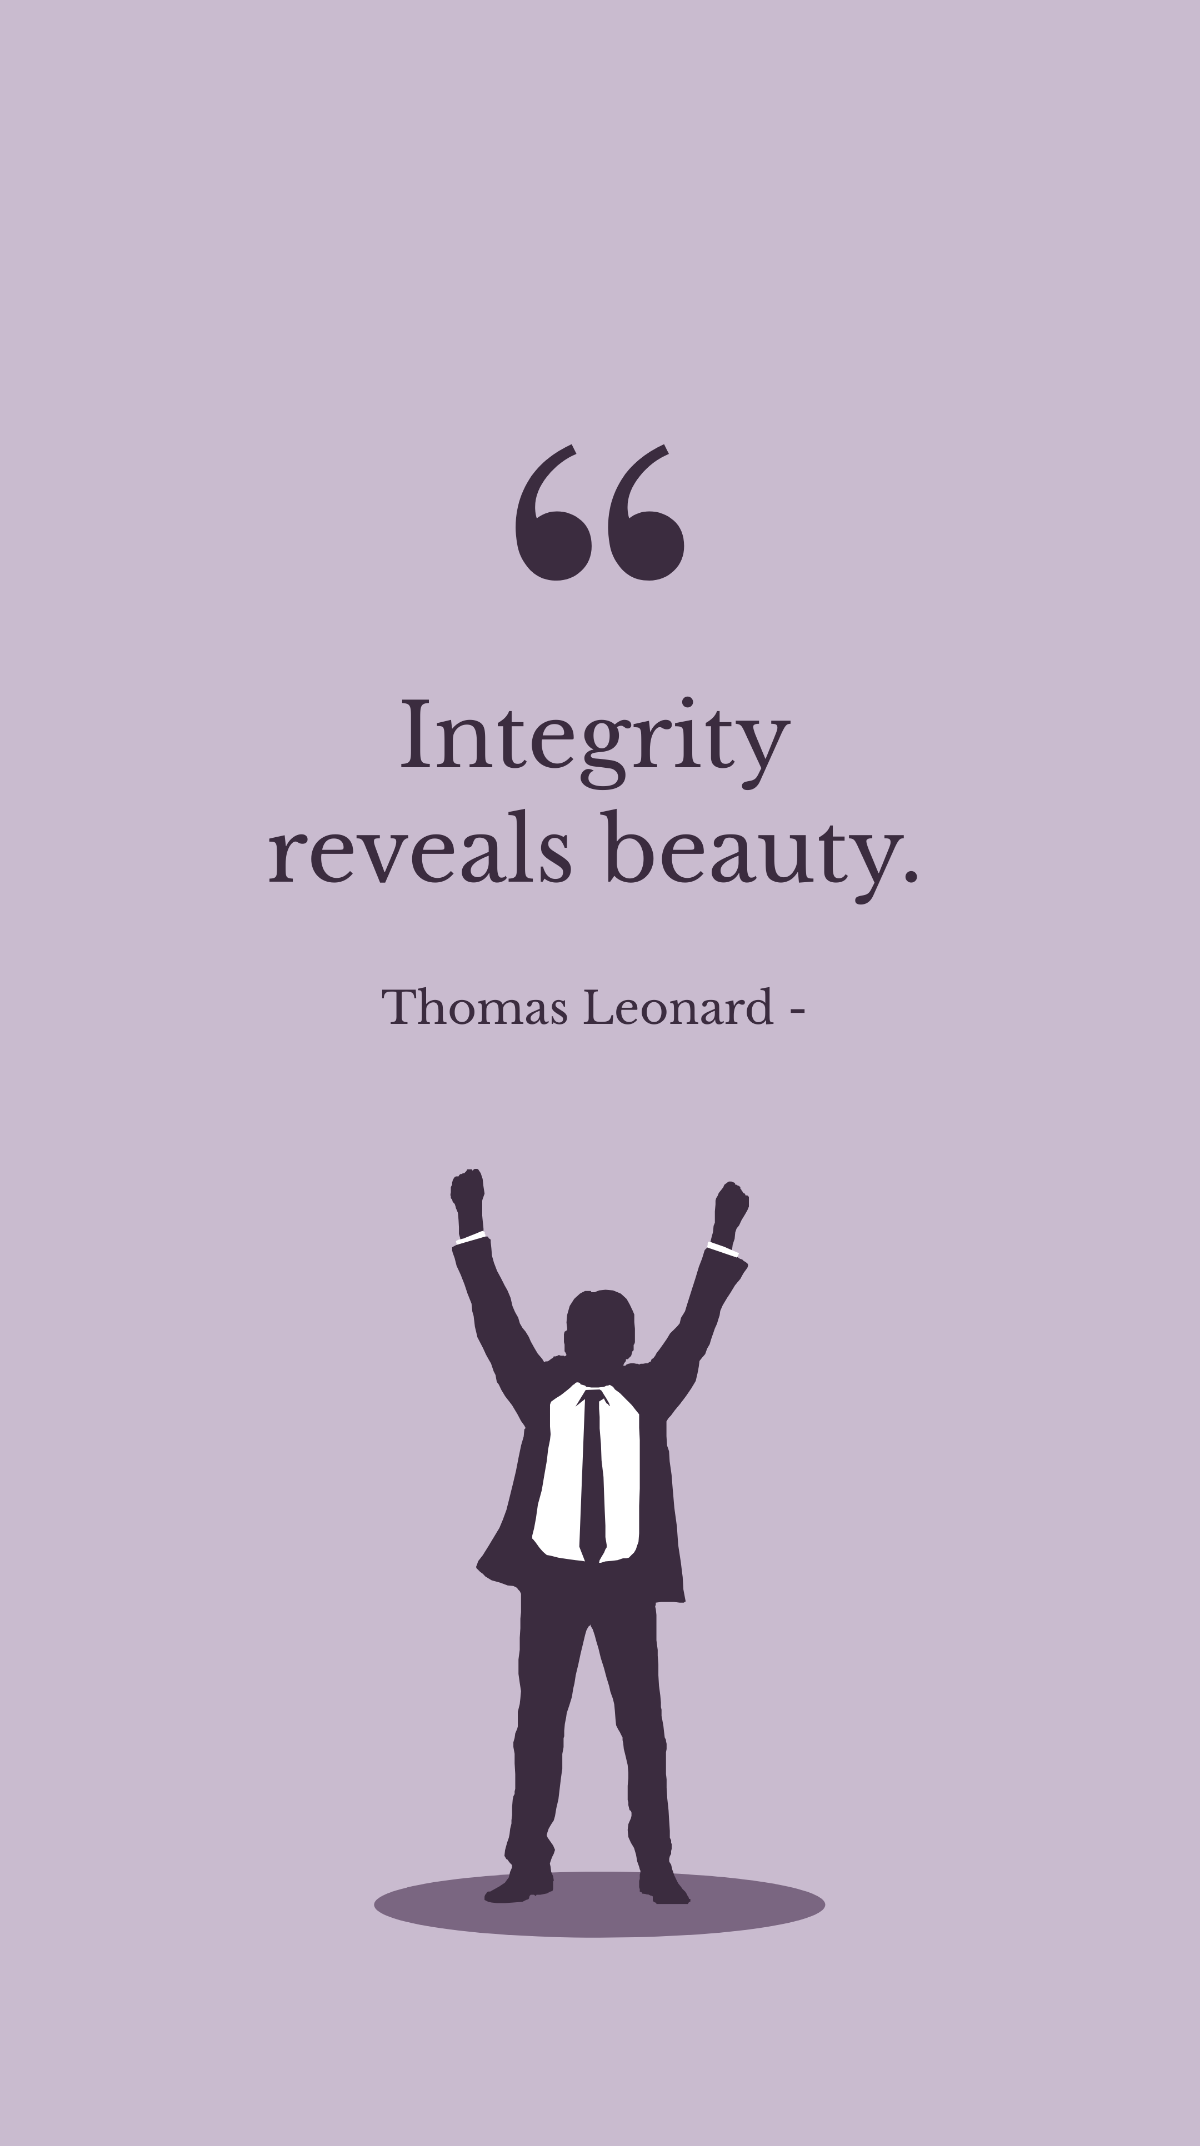 Thomas Leonard - Integrity reveals beauty. Template